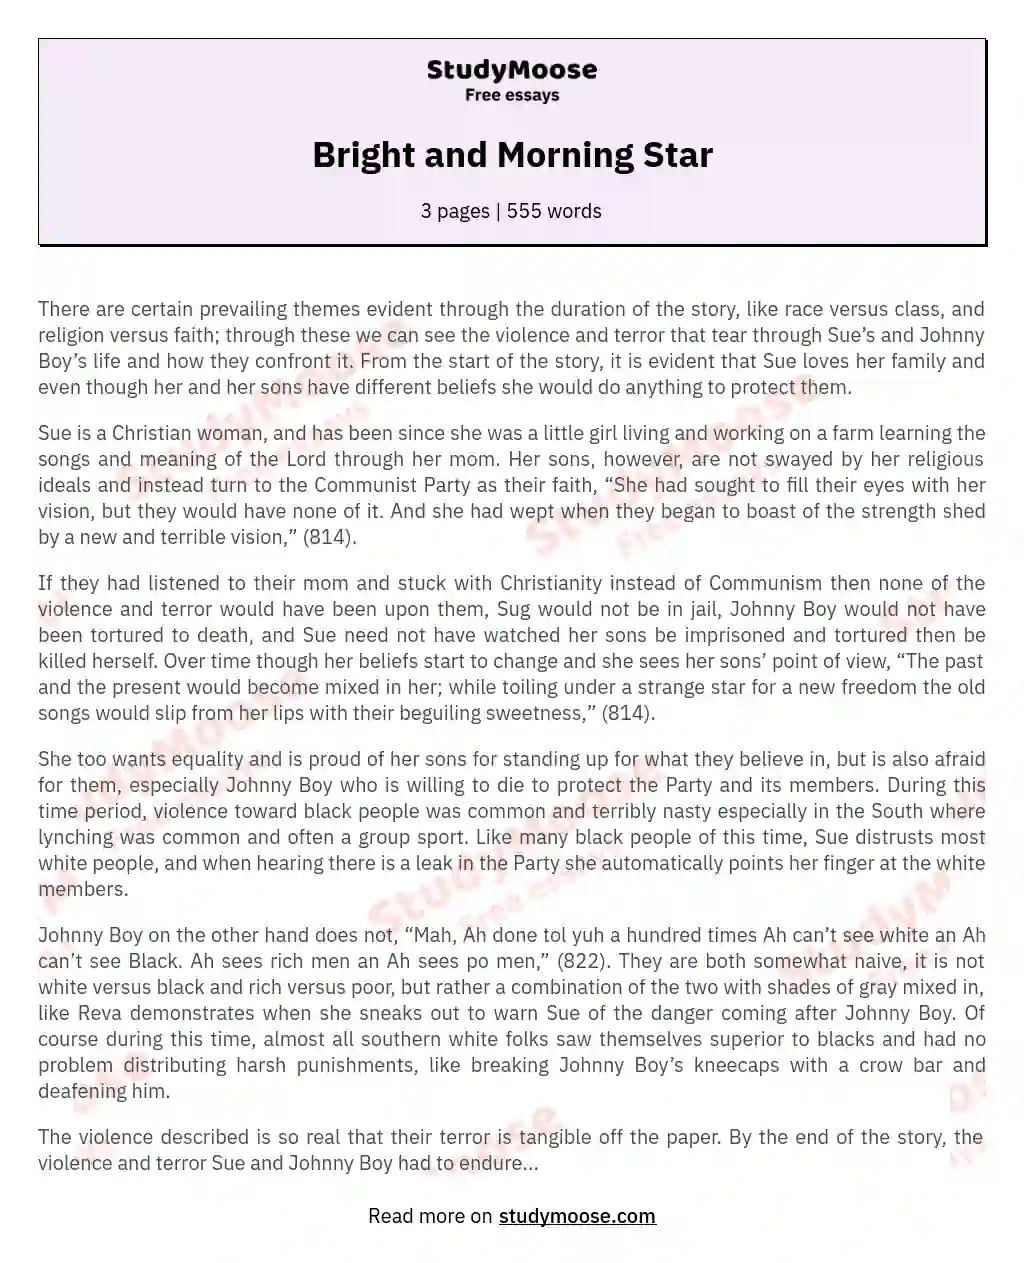 Bright and Morning Star essay